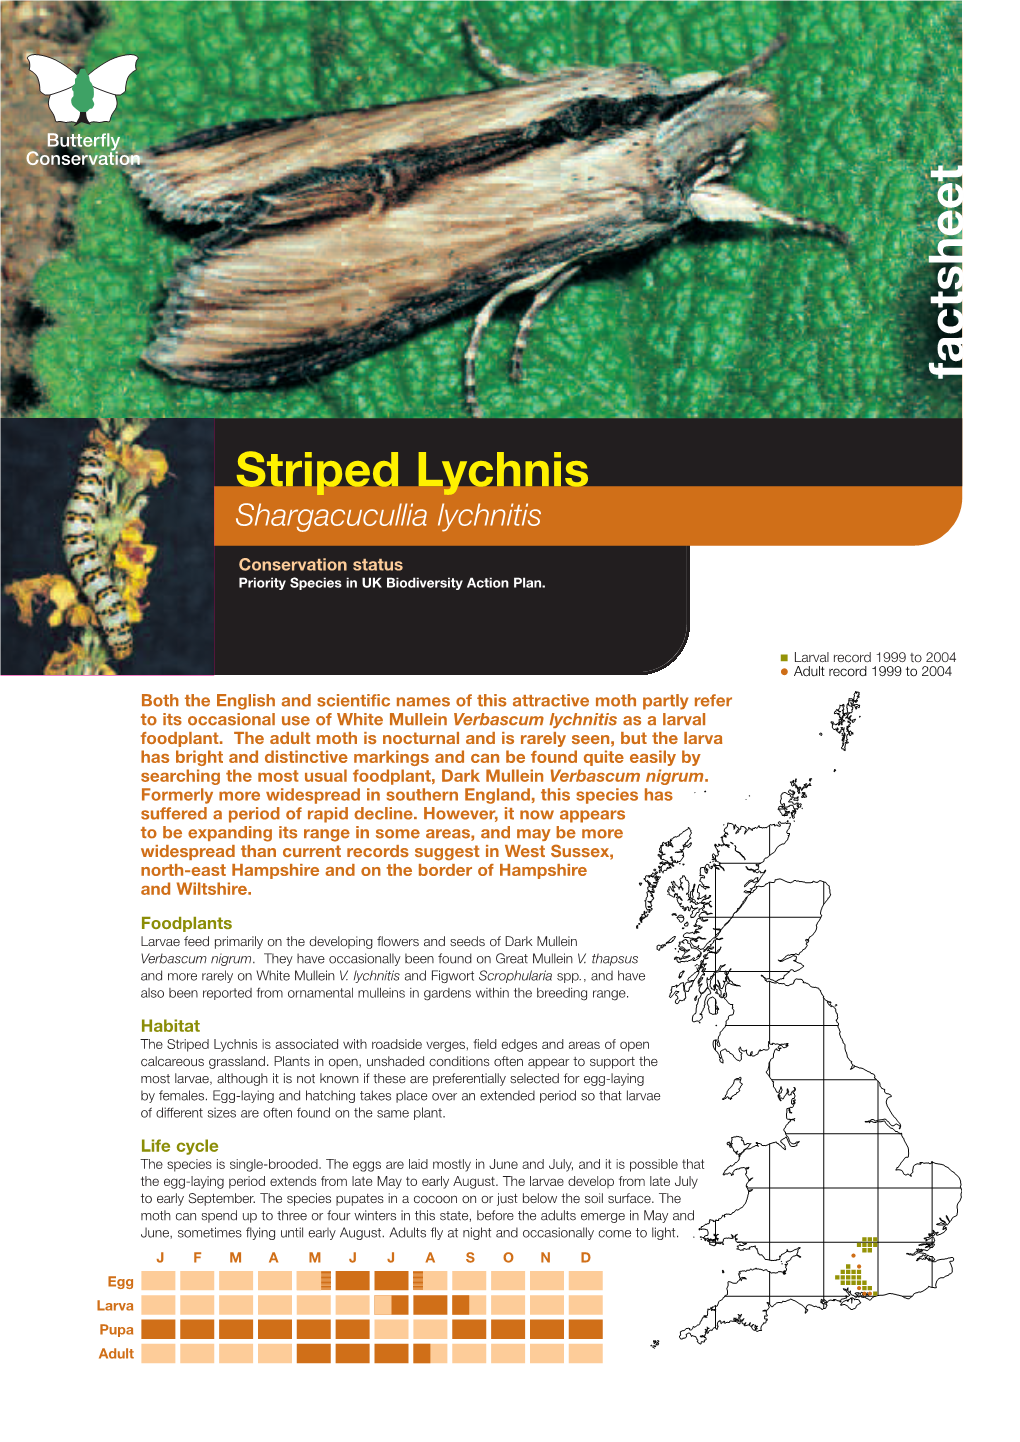 Striped Lychnis Priority Species Factsheet